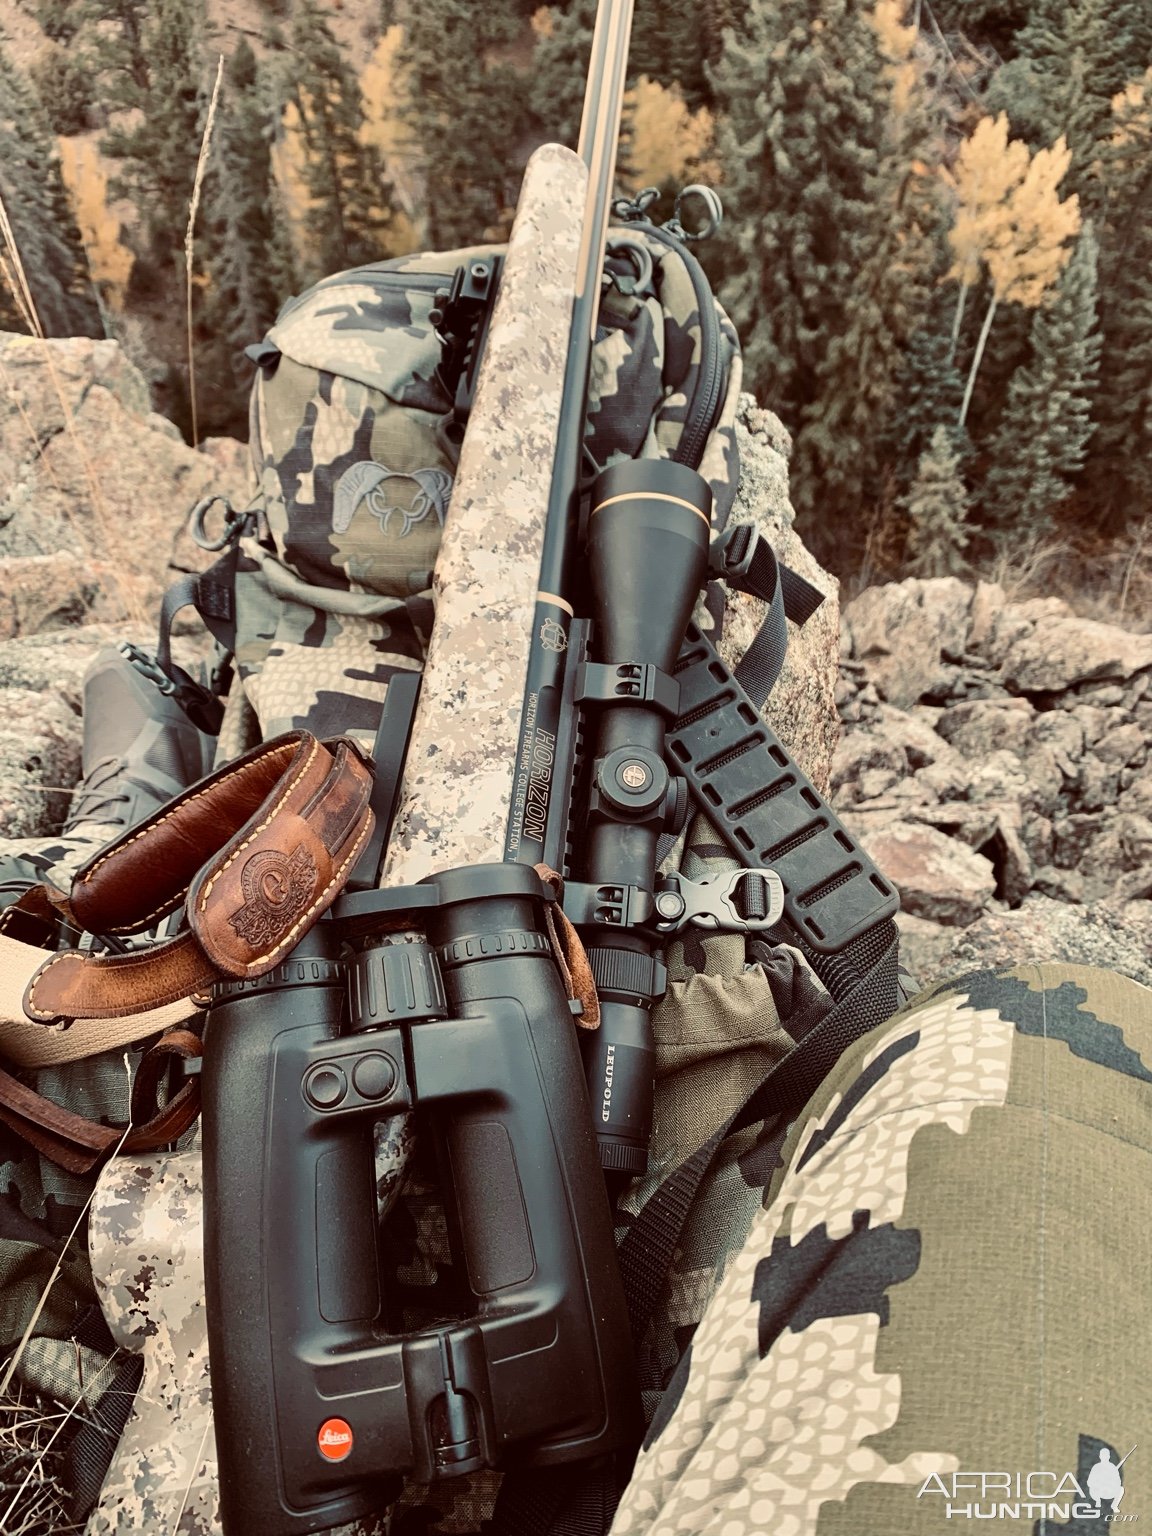 Custom 375 H&H Rifle & Leica Binoculars